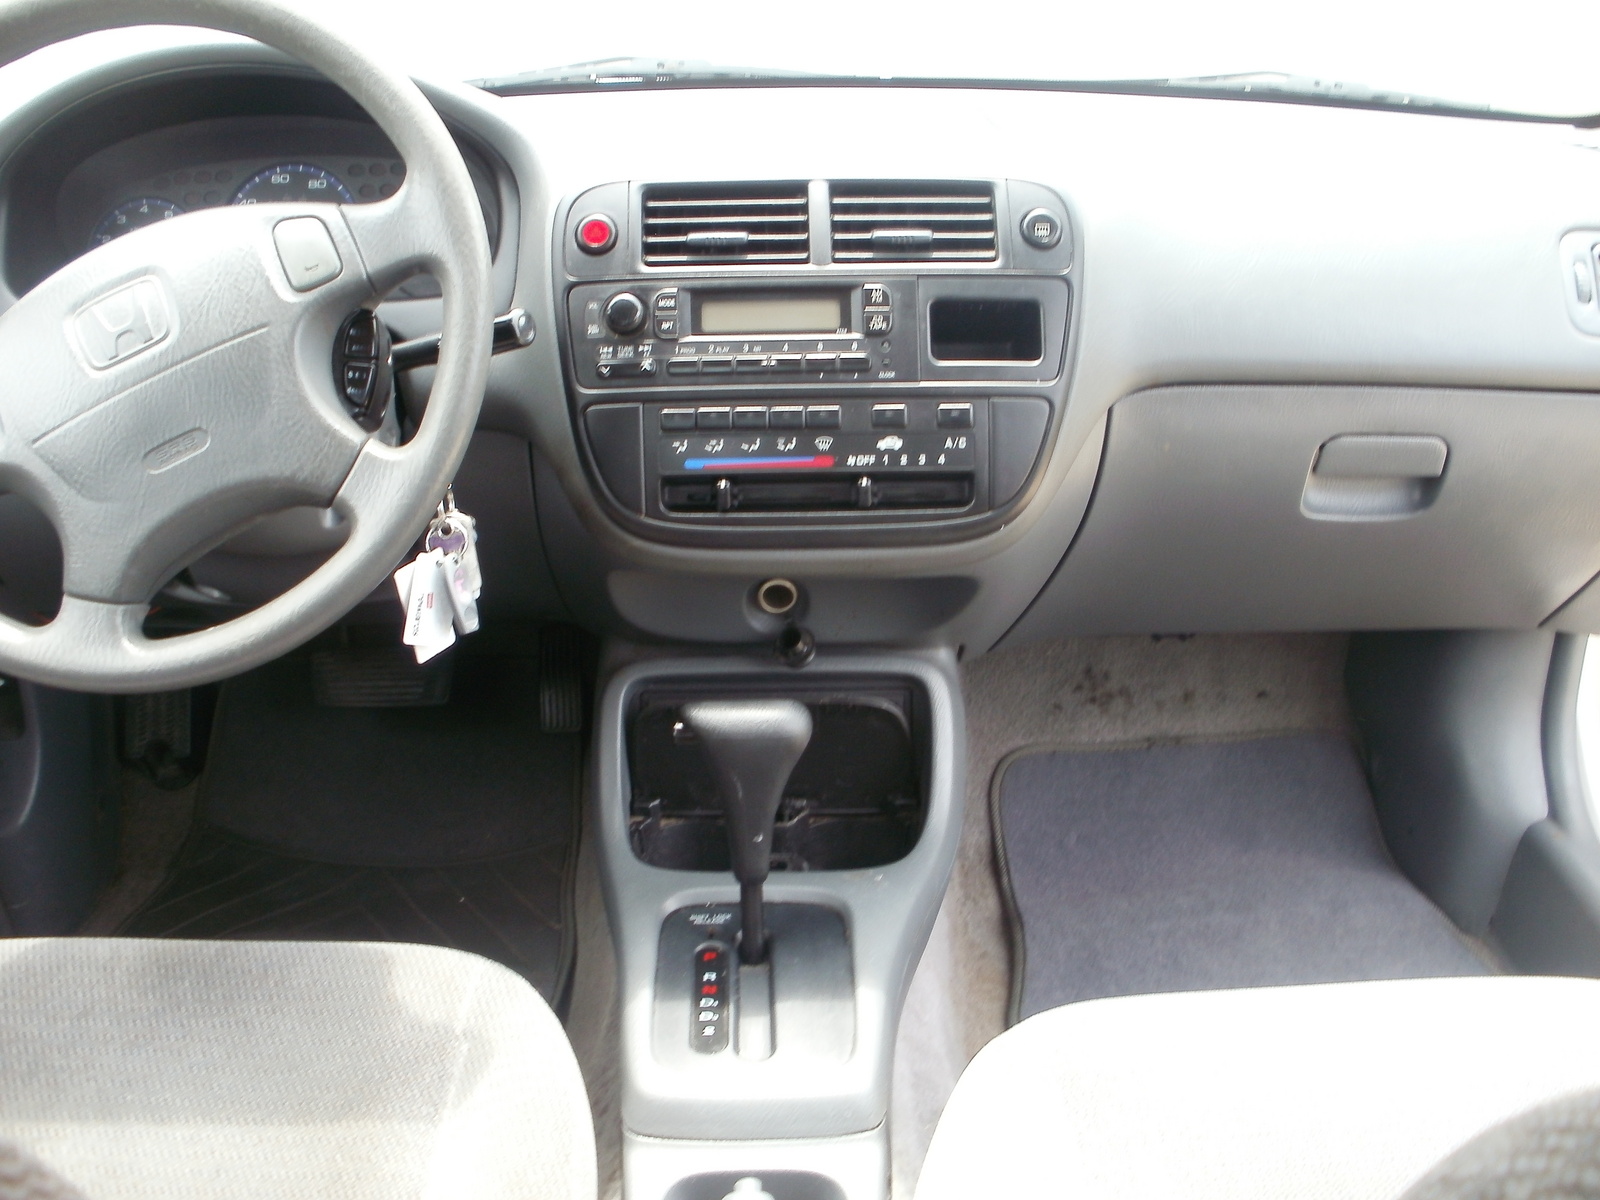 1998 Honda civic lx interior #2